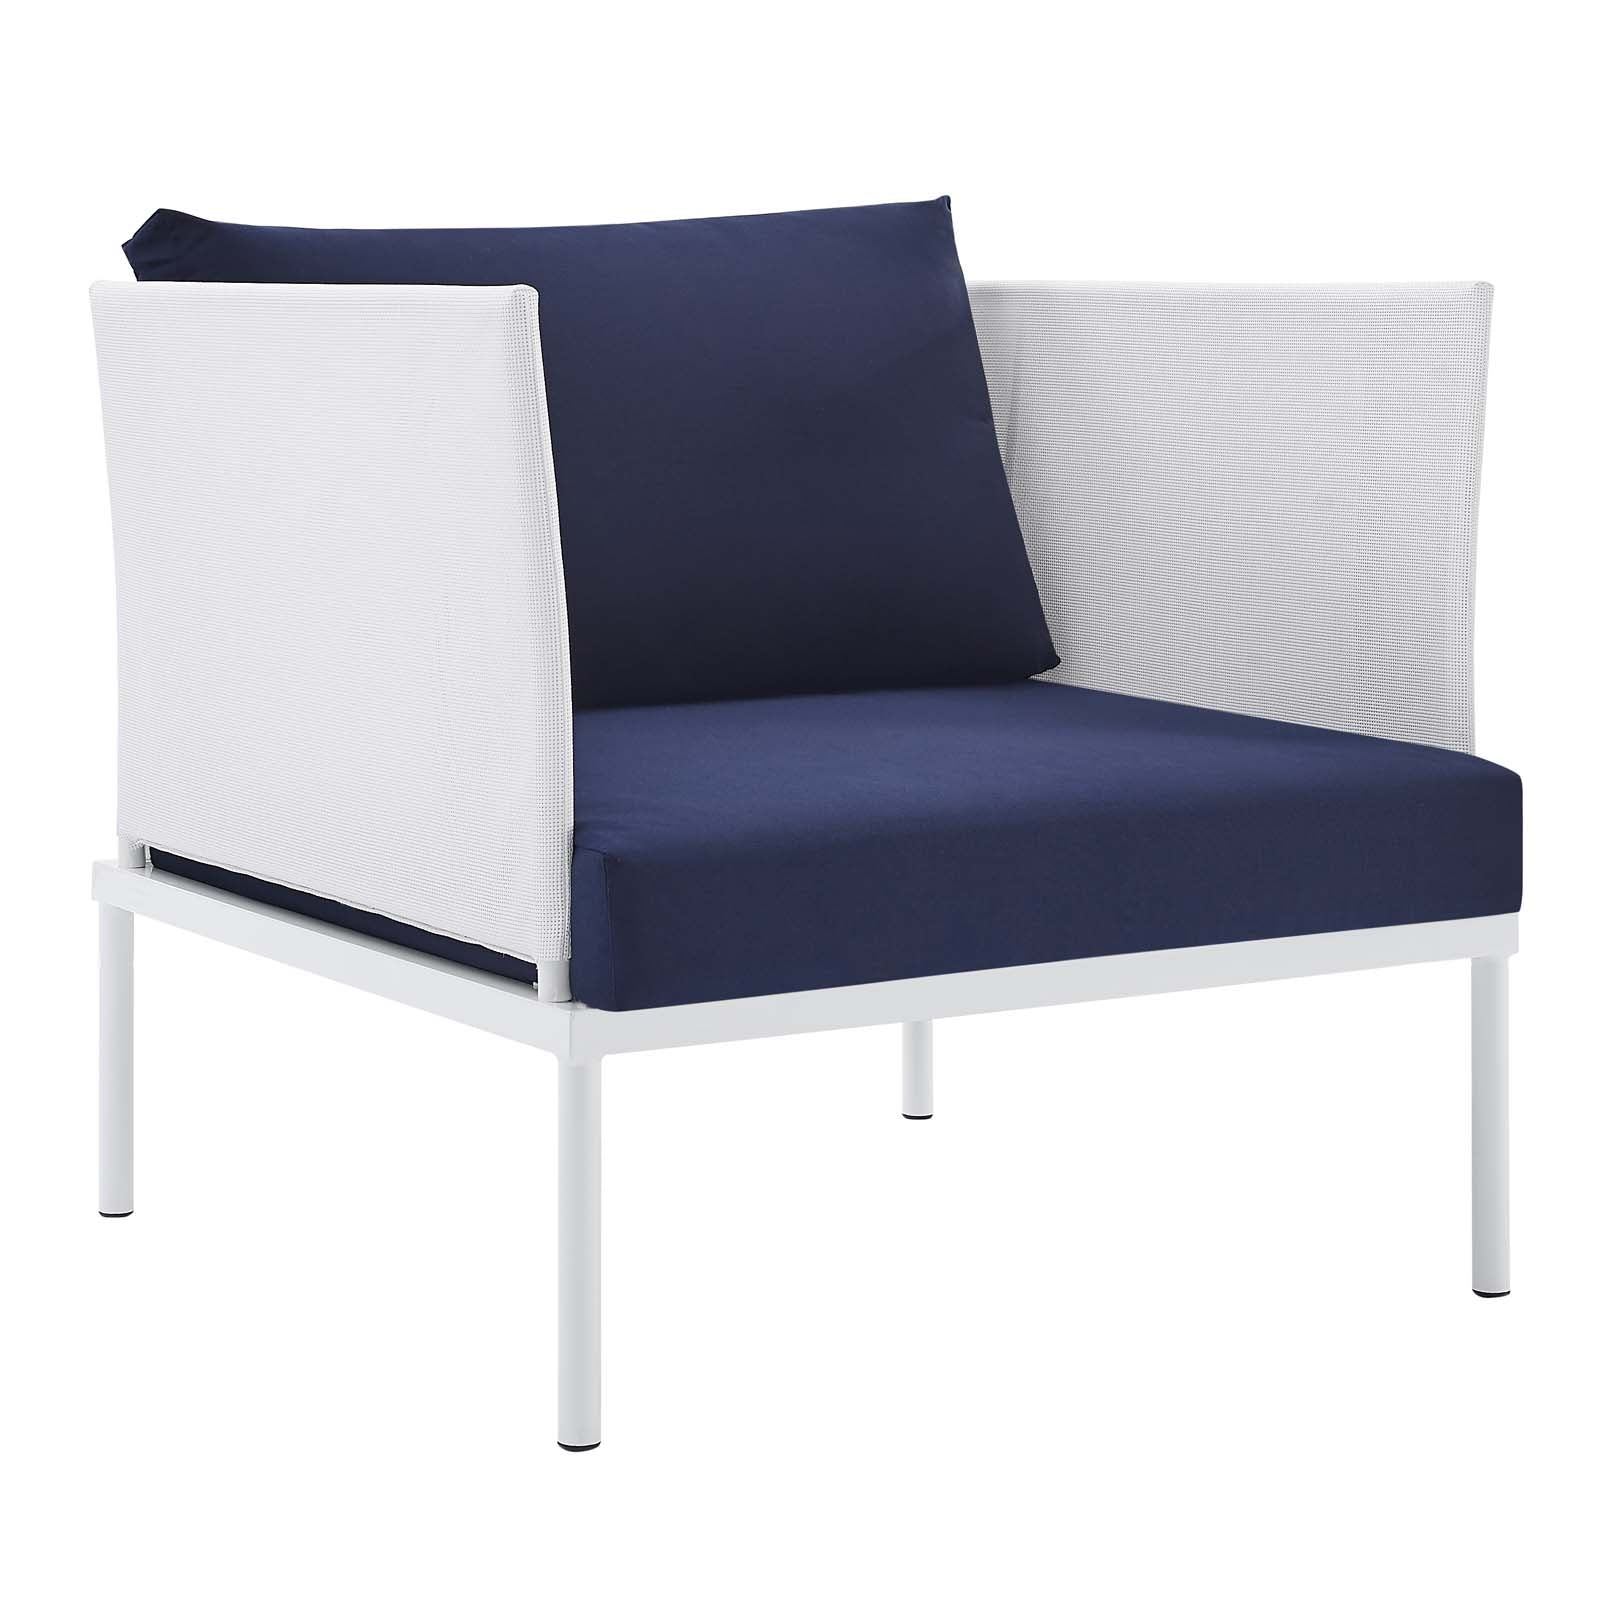 Harmony 6-Piece Sunbrella® Outdoor Patio Aluminum Seating Set-Outdoor Set-Modway-Wall2Wall Furnishings